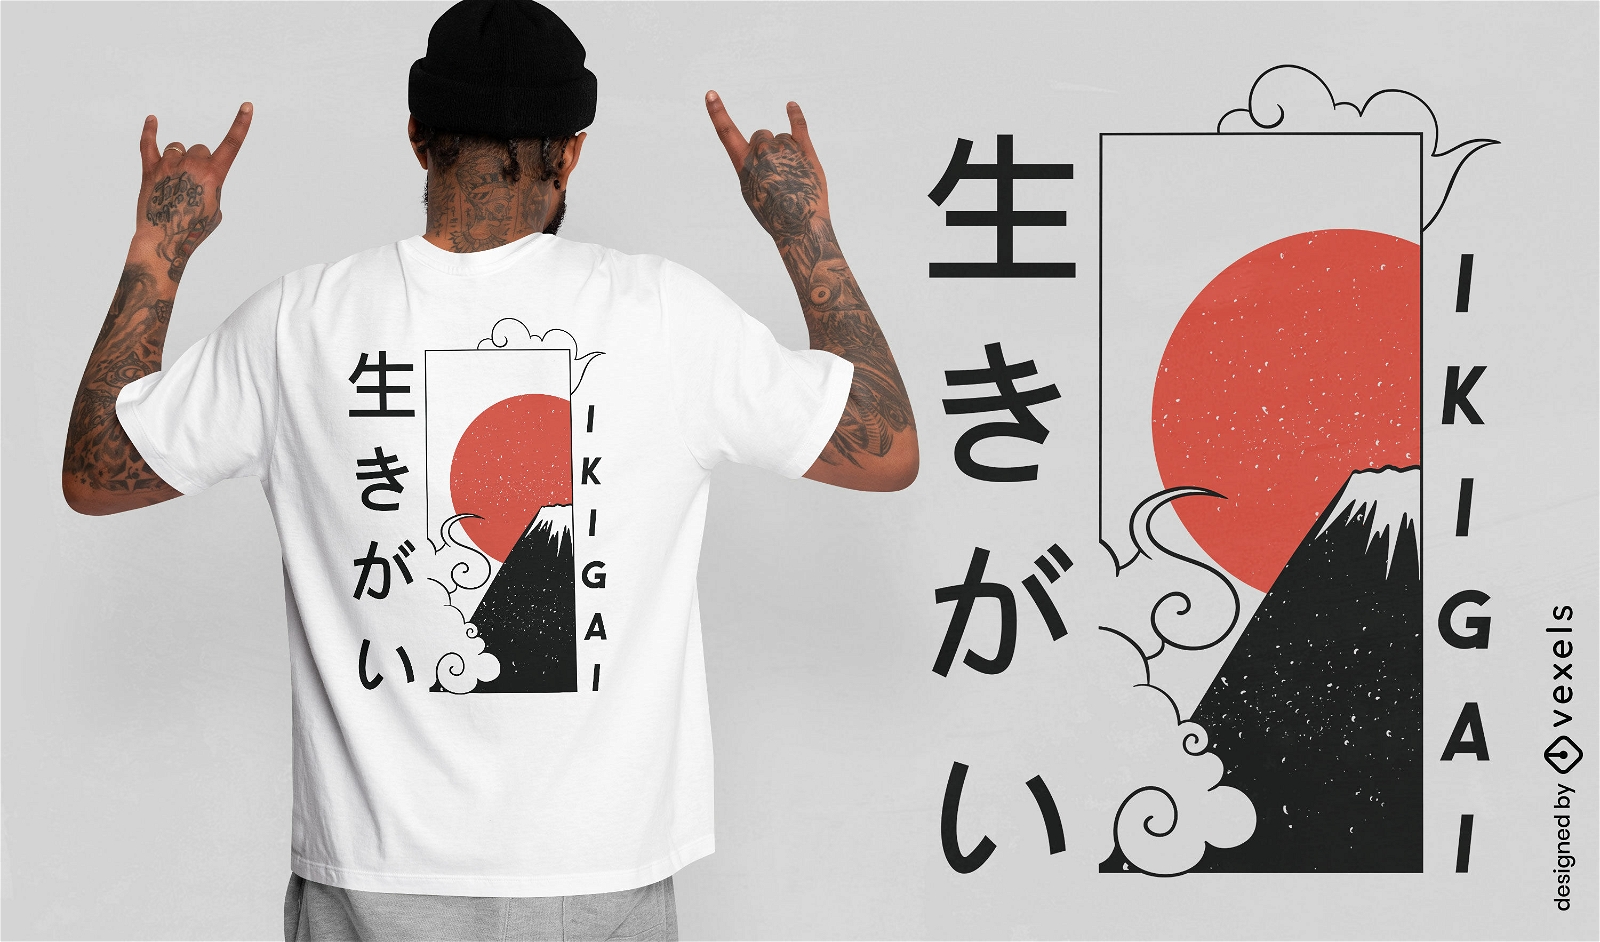 Ikigai Japanese quote t-shirt design